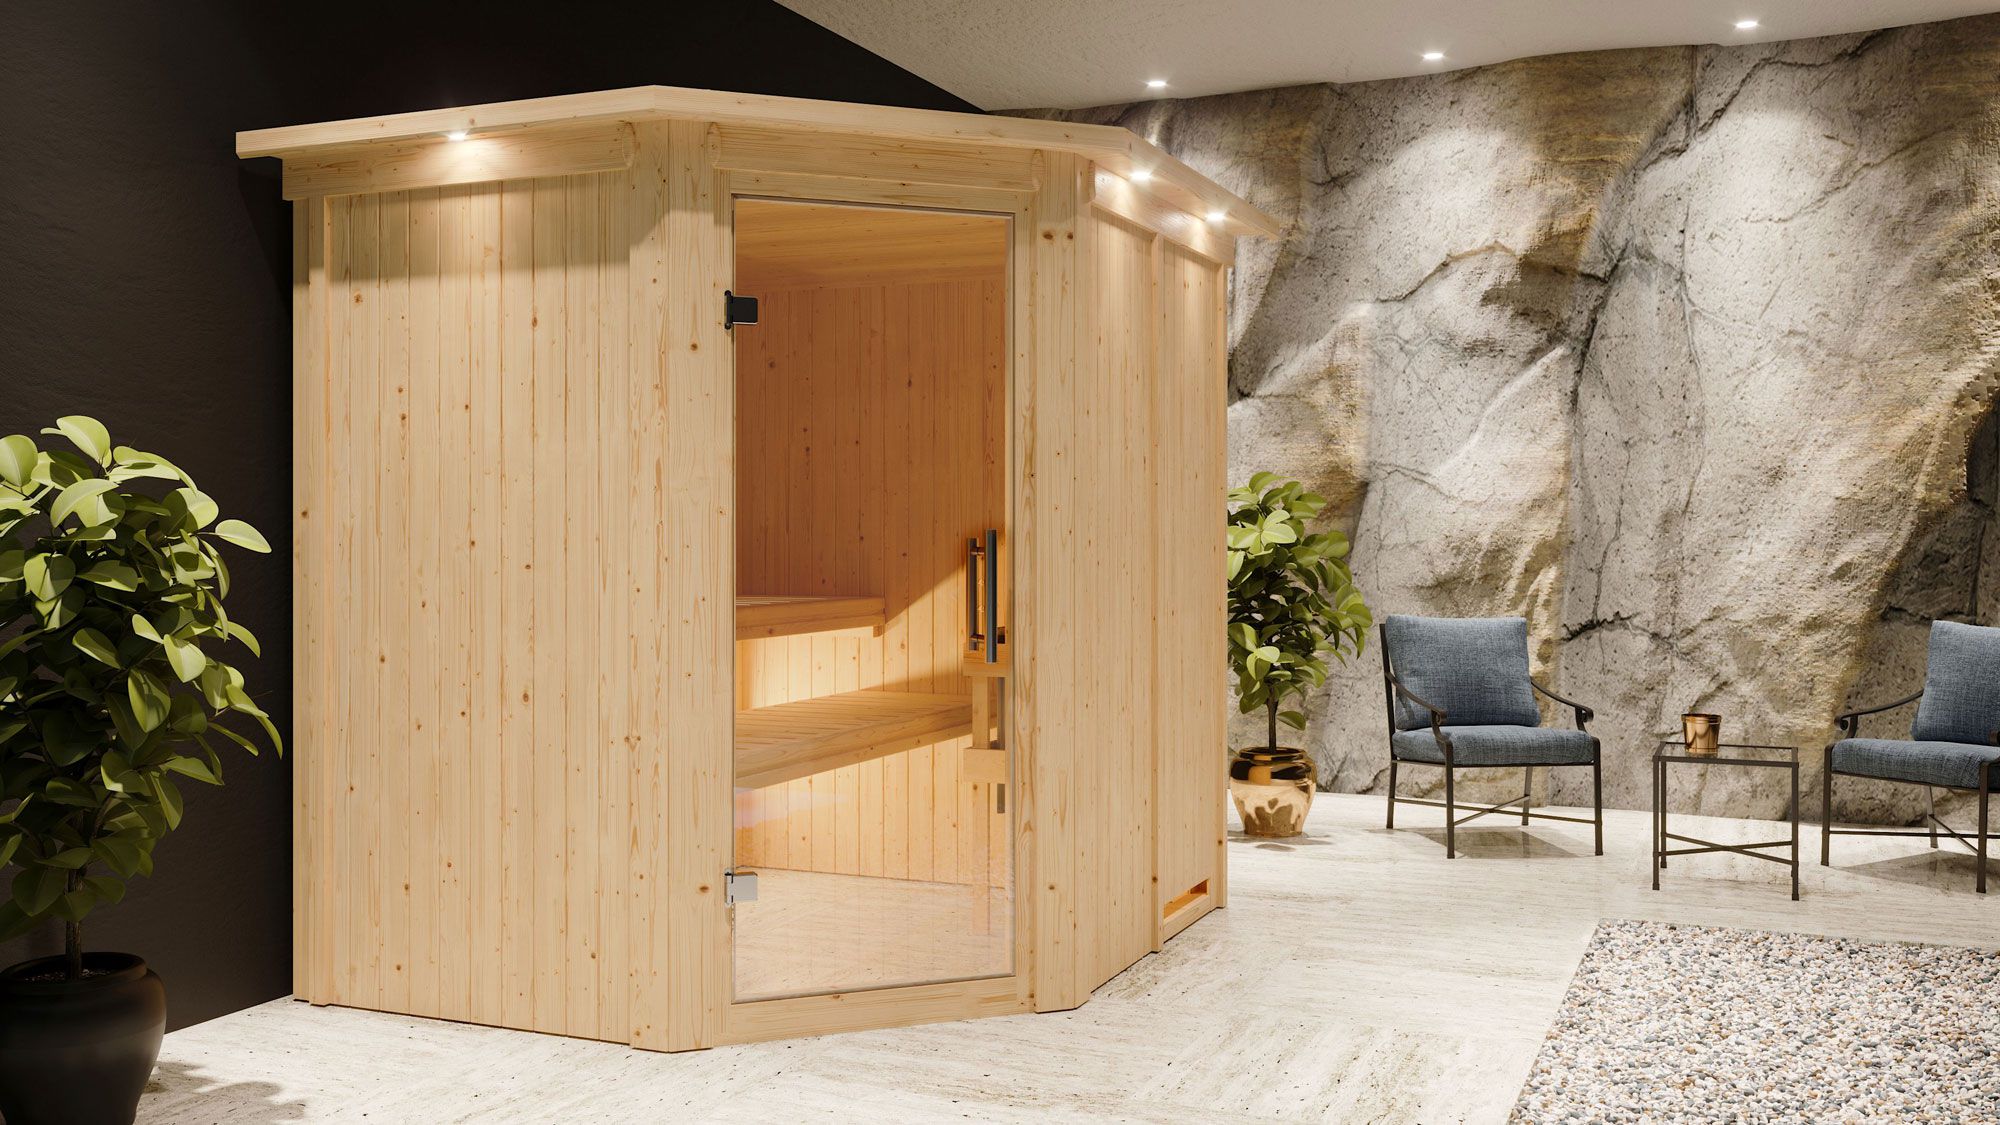 Hanko" sauna met deur en rand van helder glas - Kleur: Naturel - 210 x 184 x 202 cm (B x D x H)